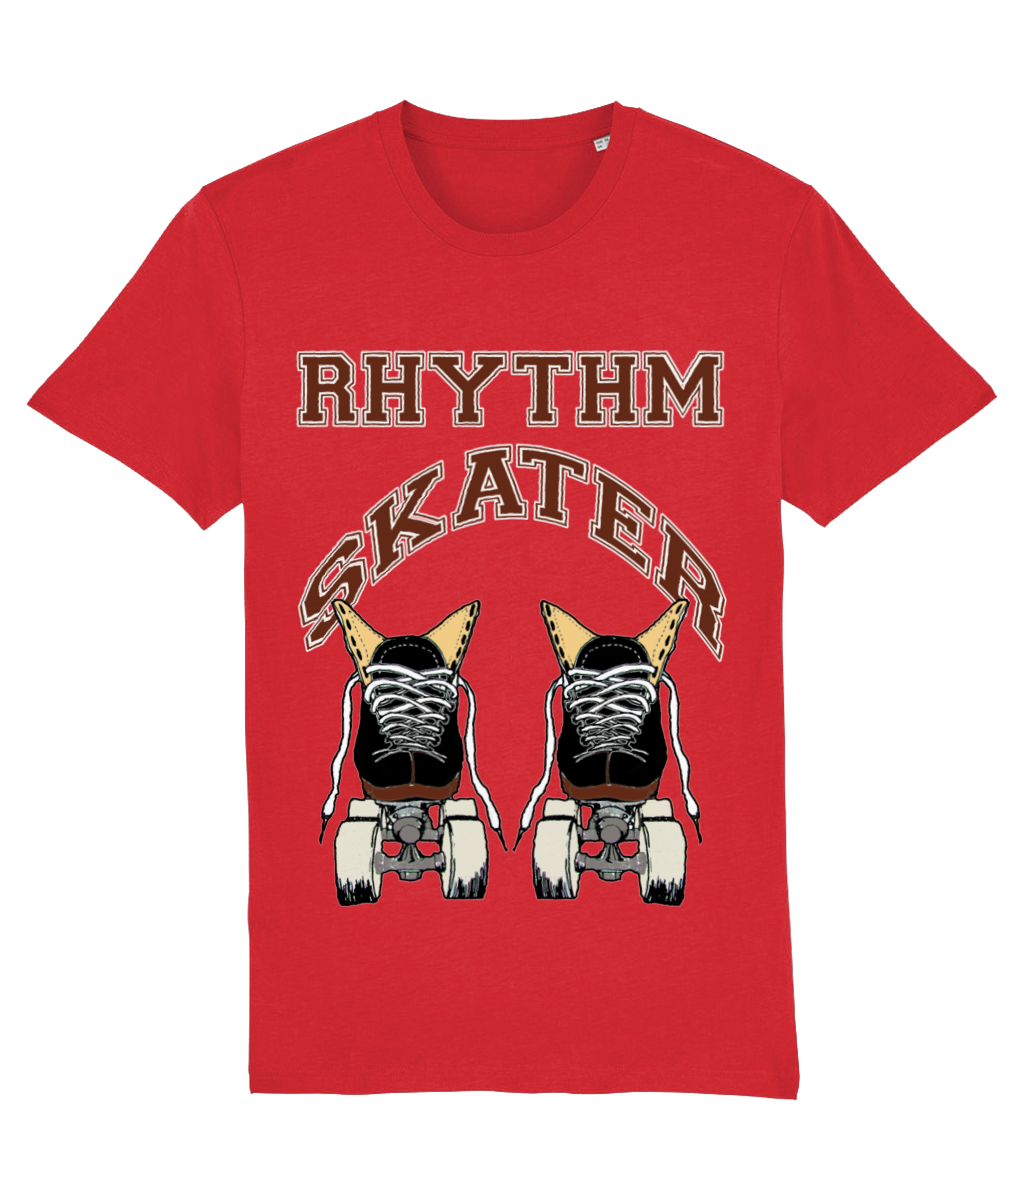 Tshirt Rhythm Skater classic